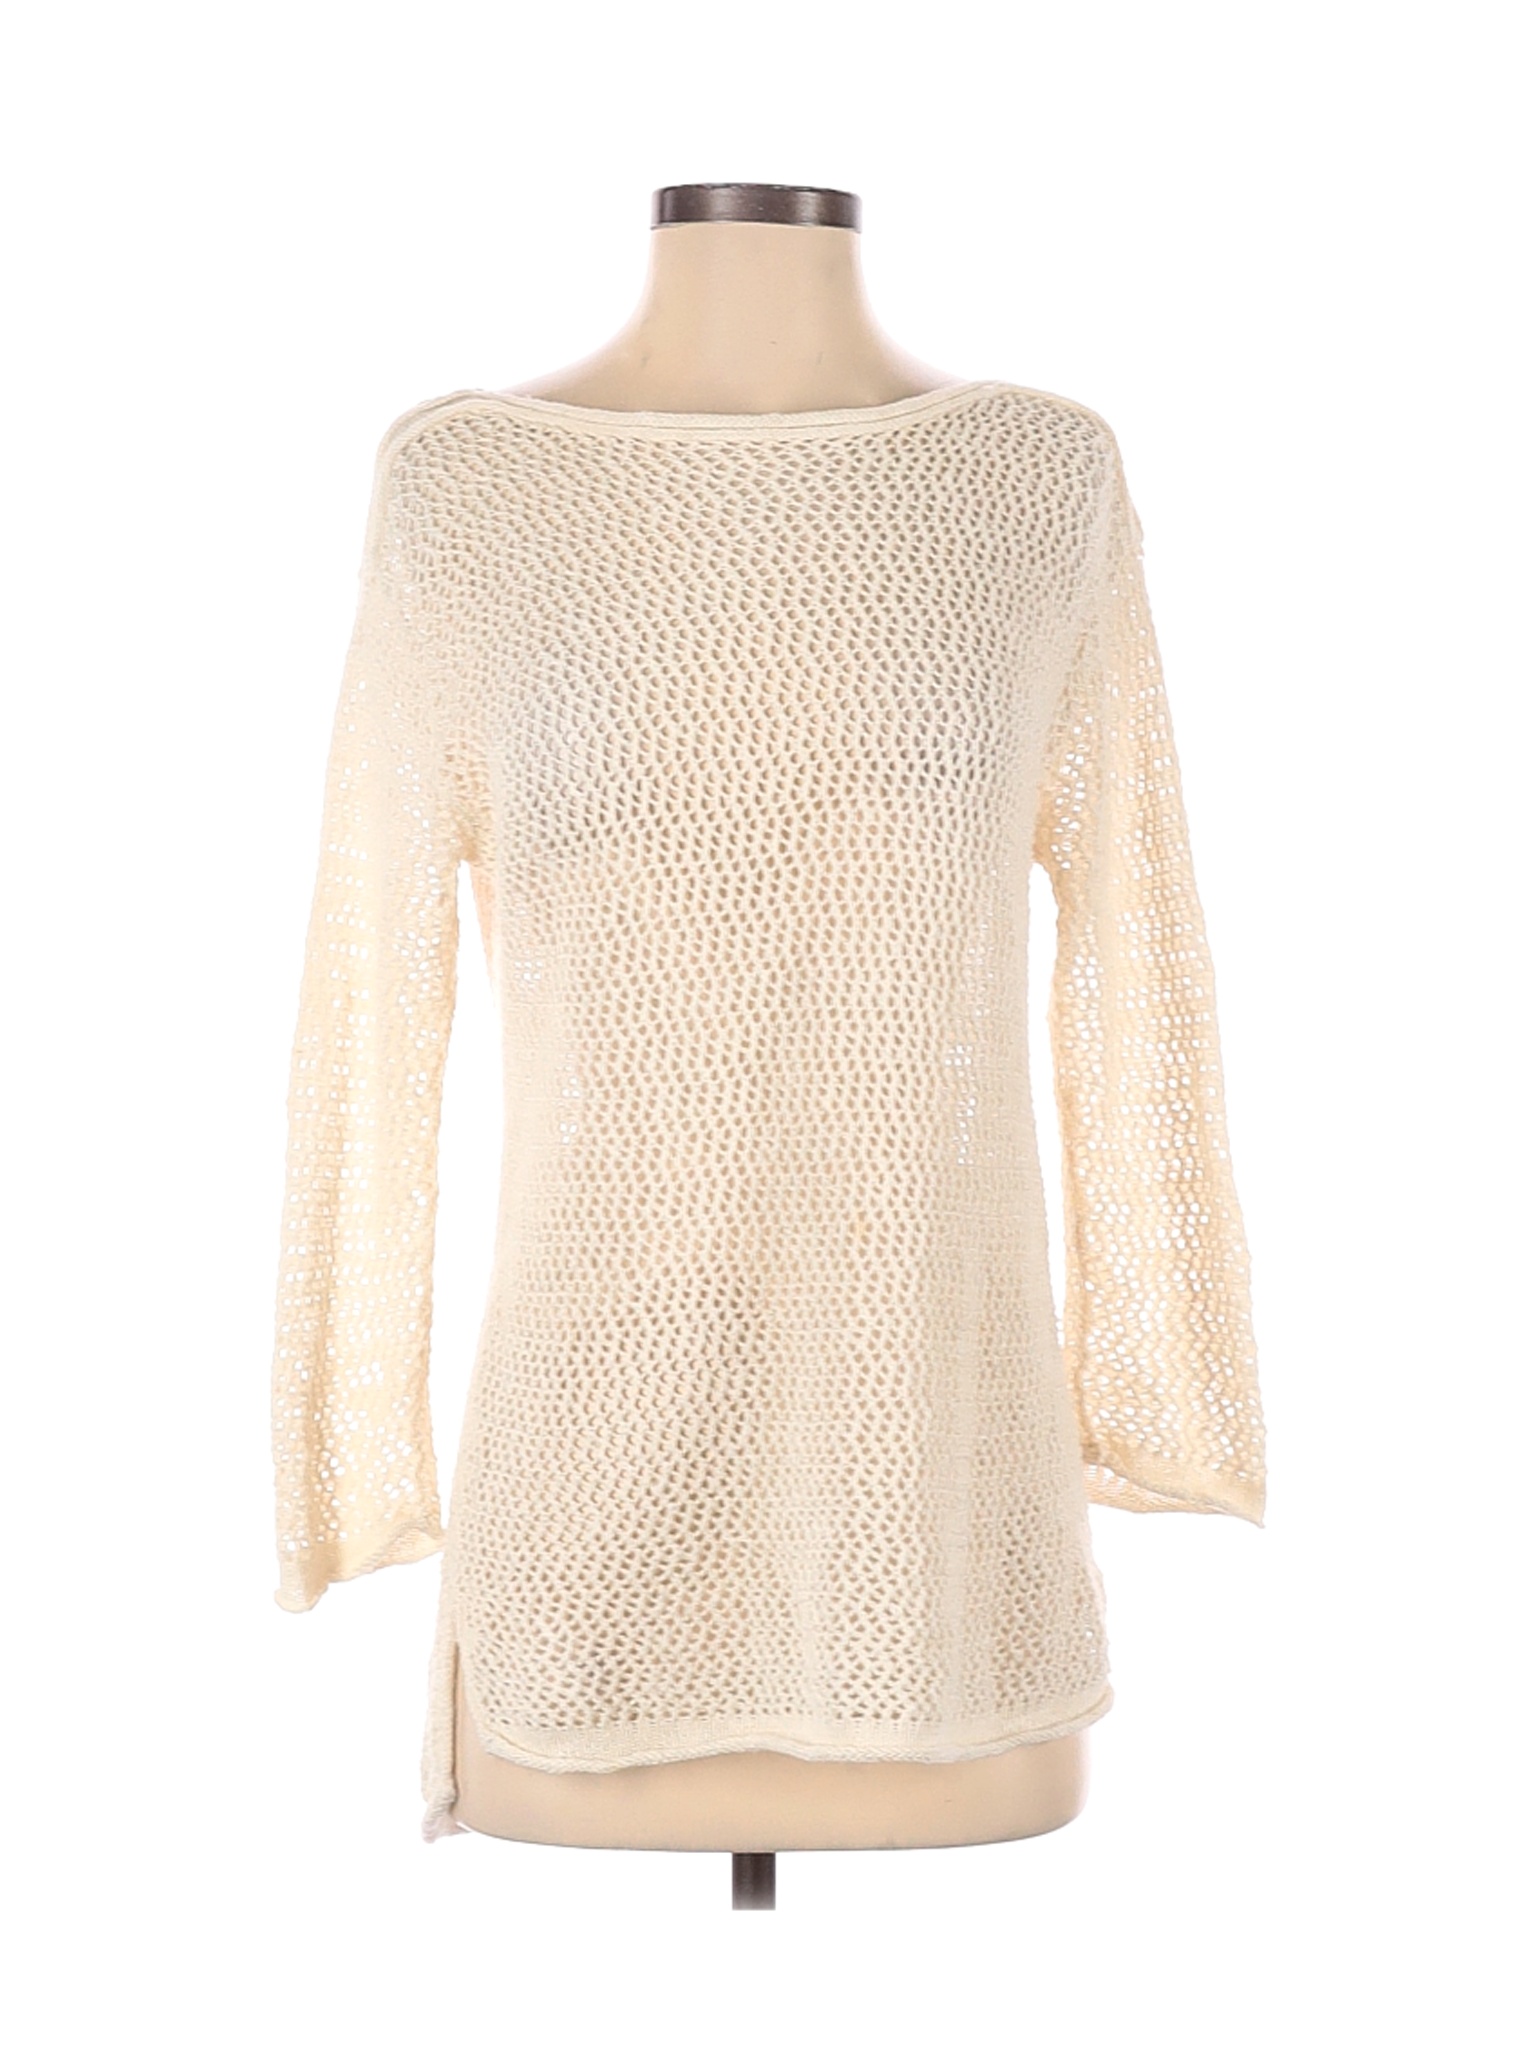 Calypso St. Barth Women Brown Pullover Sweater S | eBay